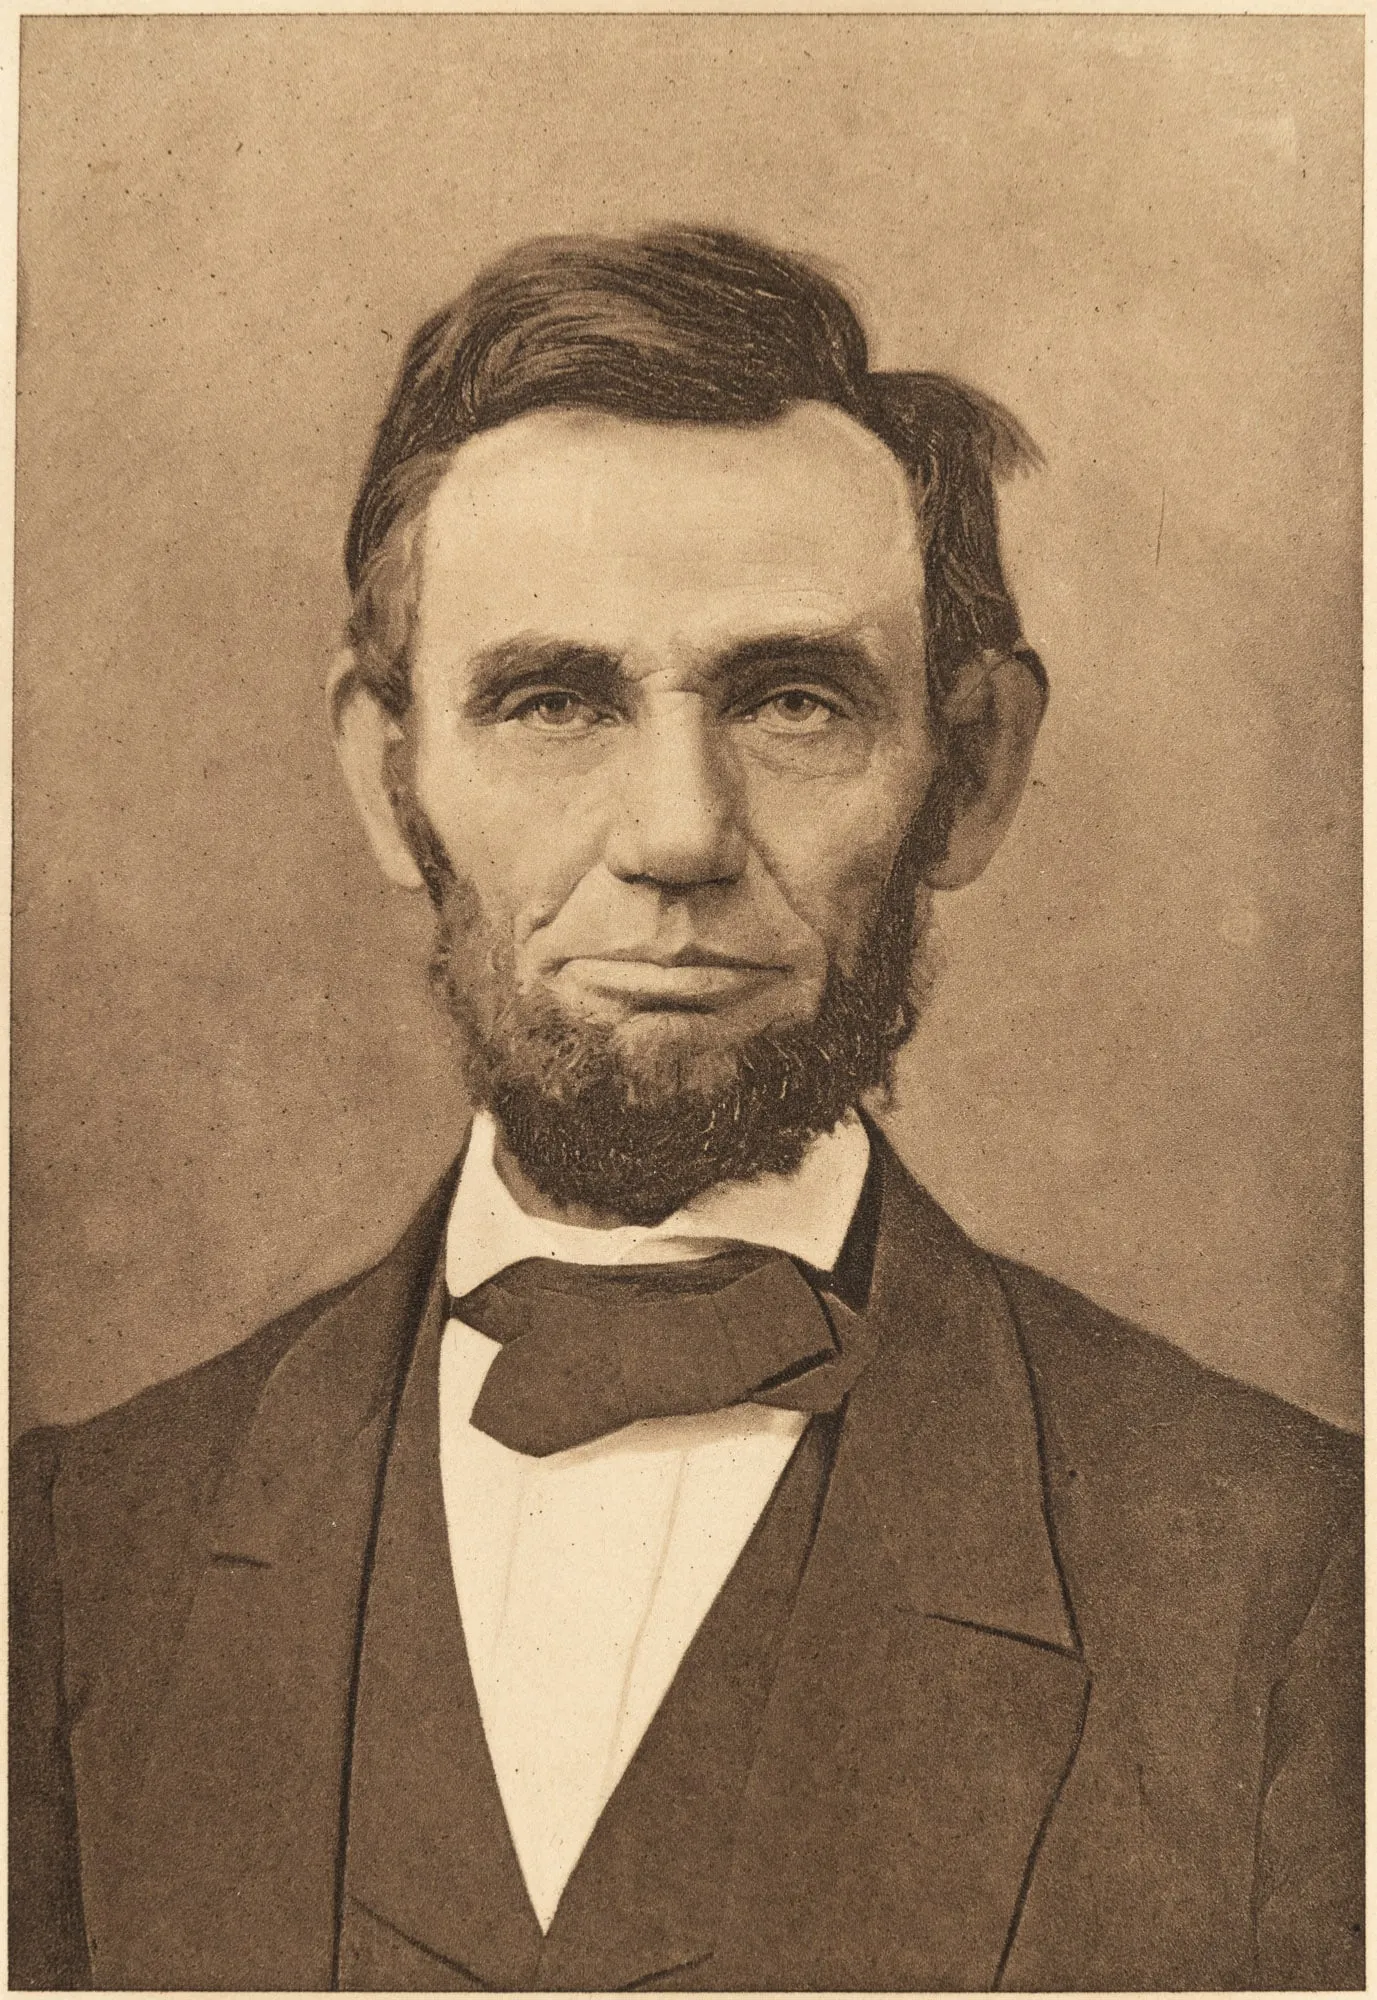 Abraham Lincoln photographs bring the 16th US president to life at PBA Feb. 22